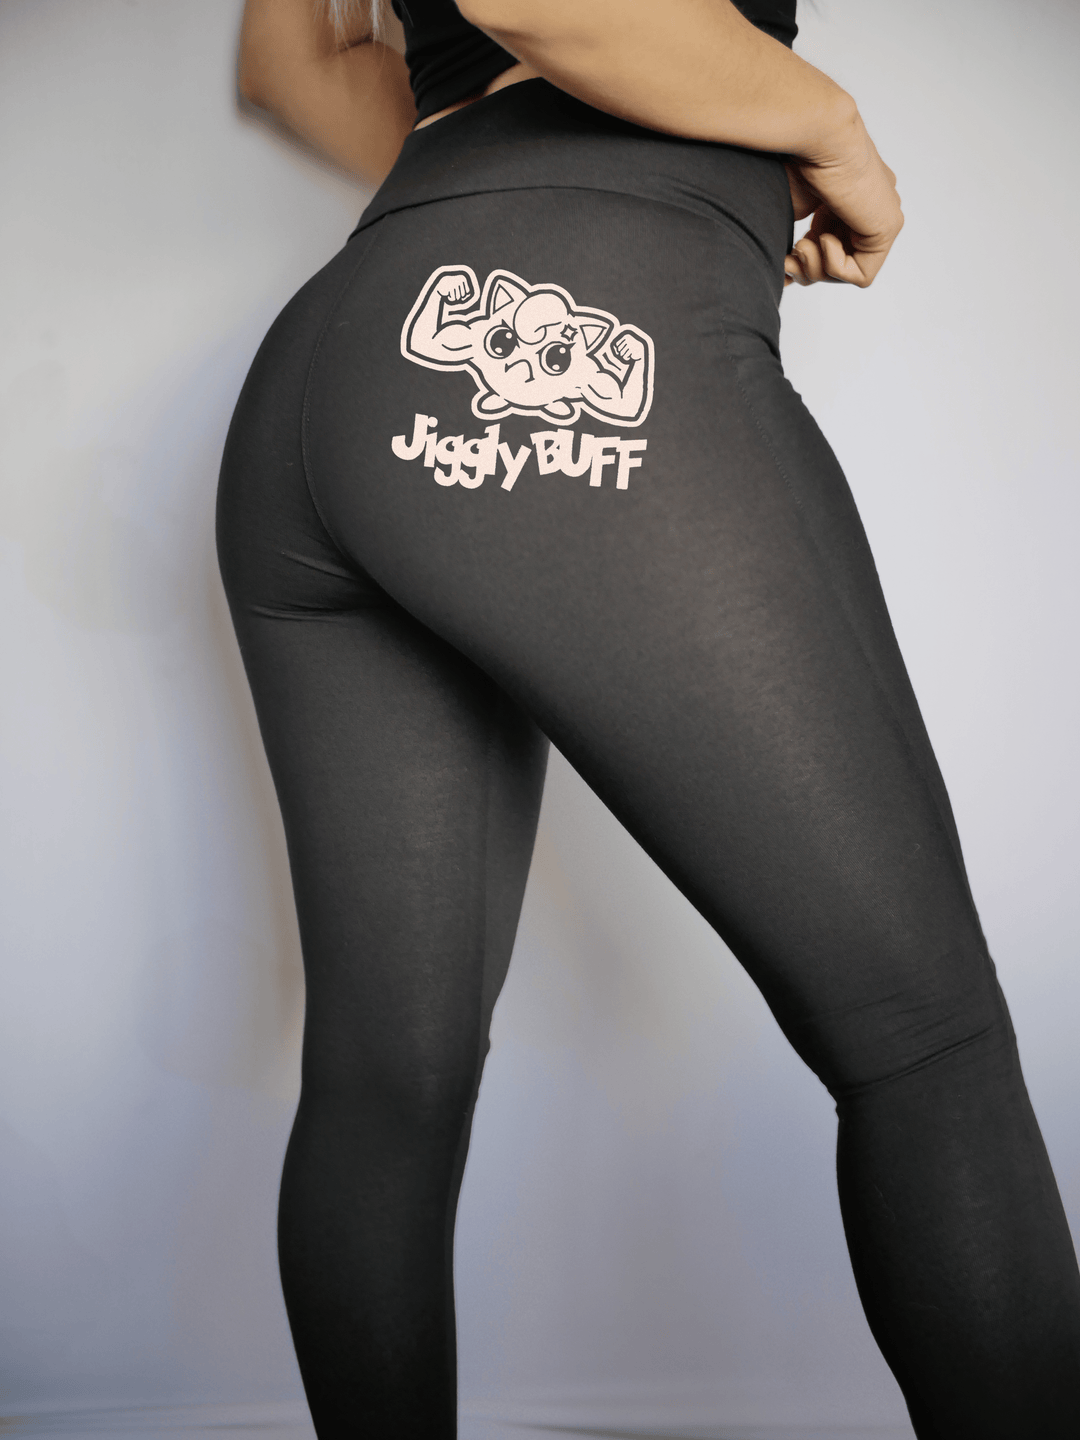 PixelThat Punderwear Yoga Pants Small JigglyBuff Yoga Pants